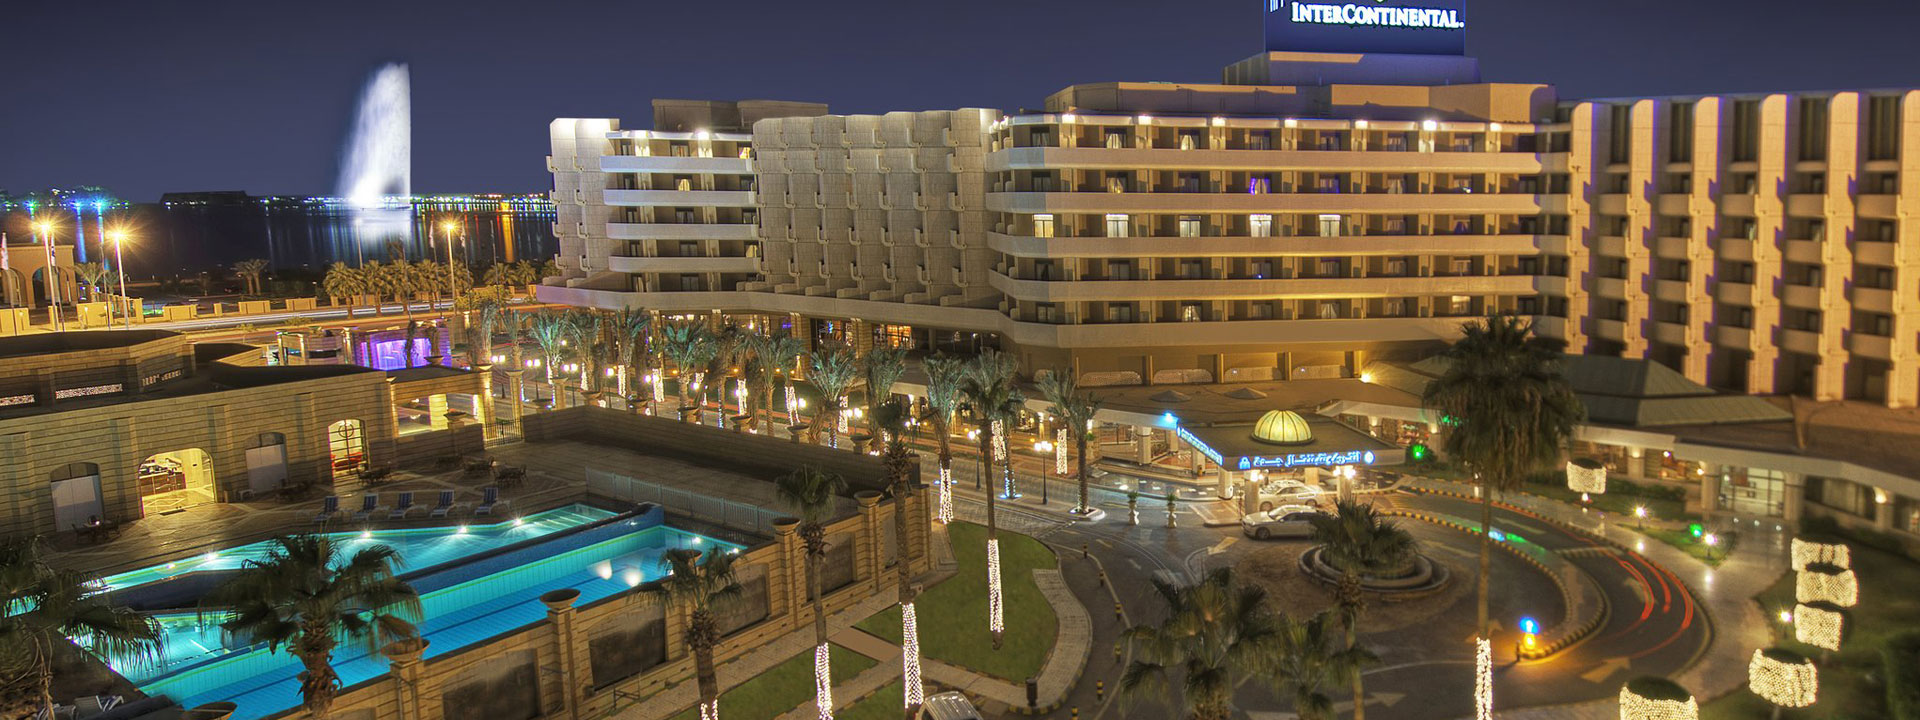 Loyd-Capital-Partners-Intercontinental-Hotel-Saudi-Arabia